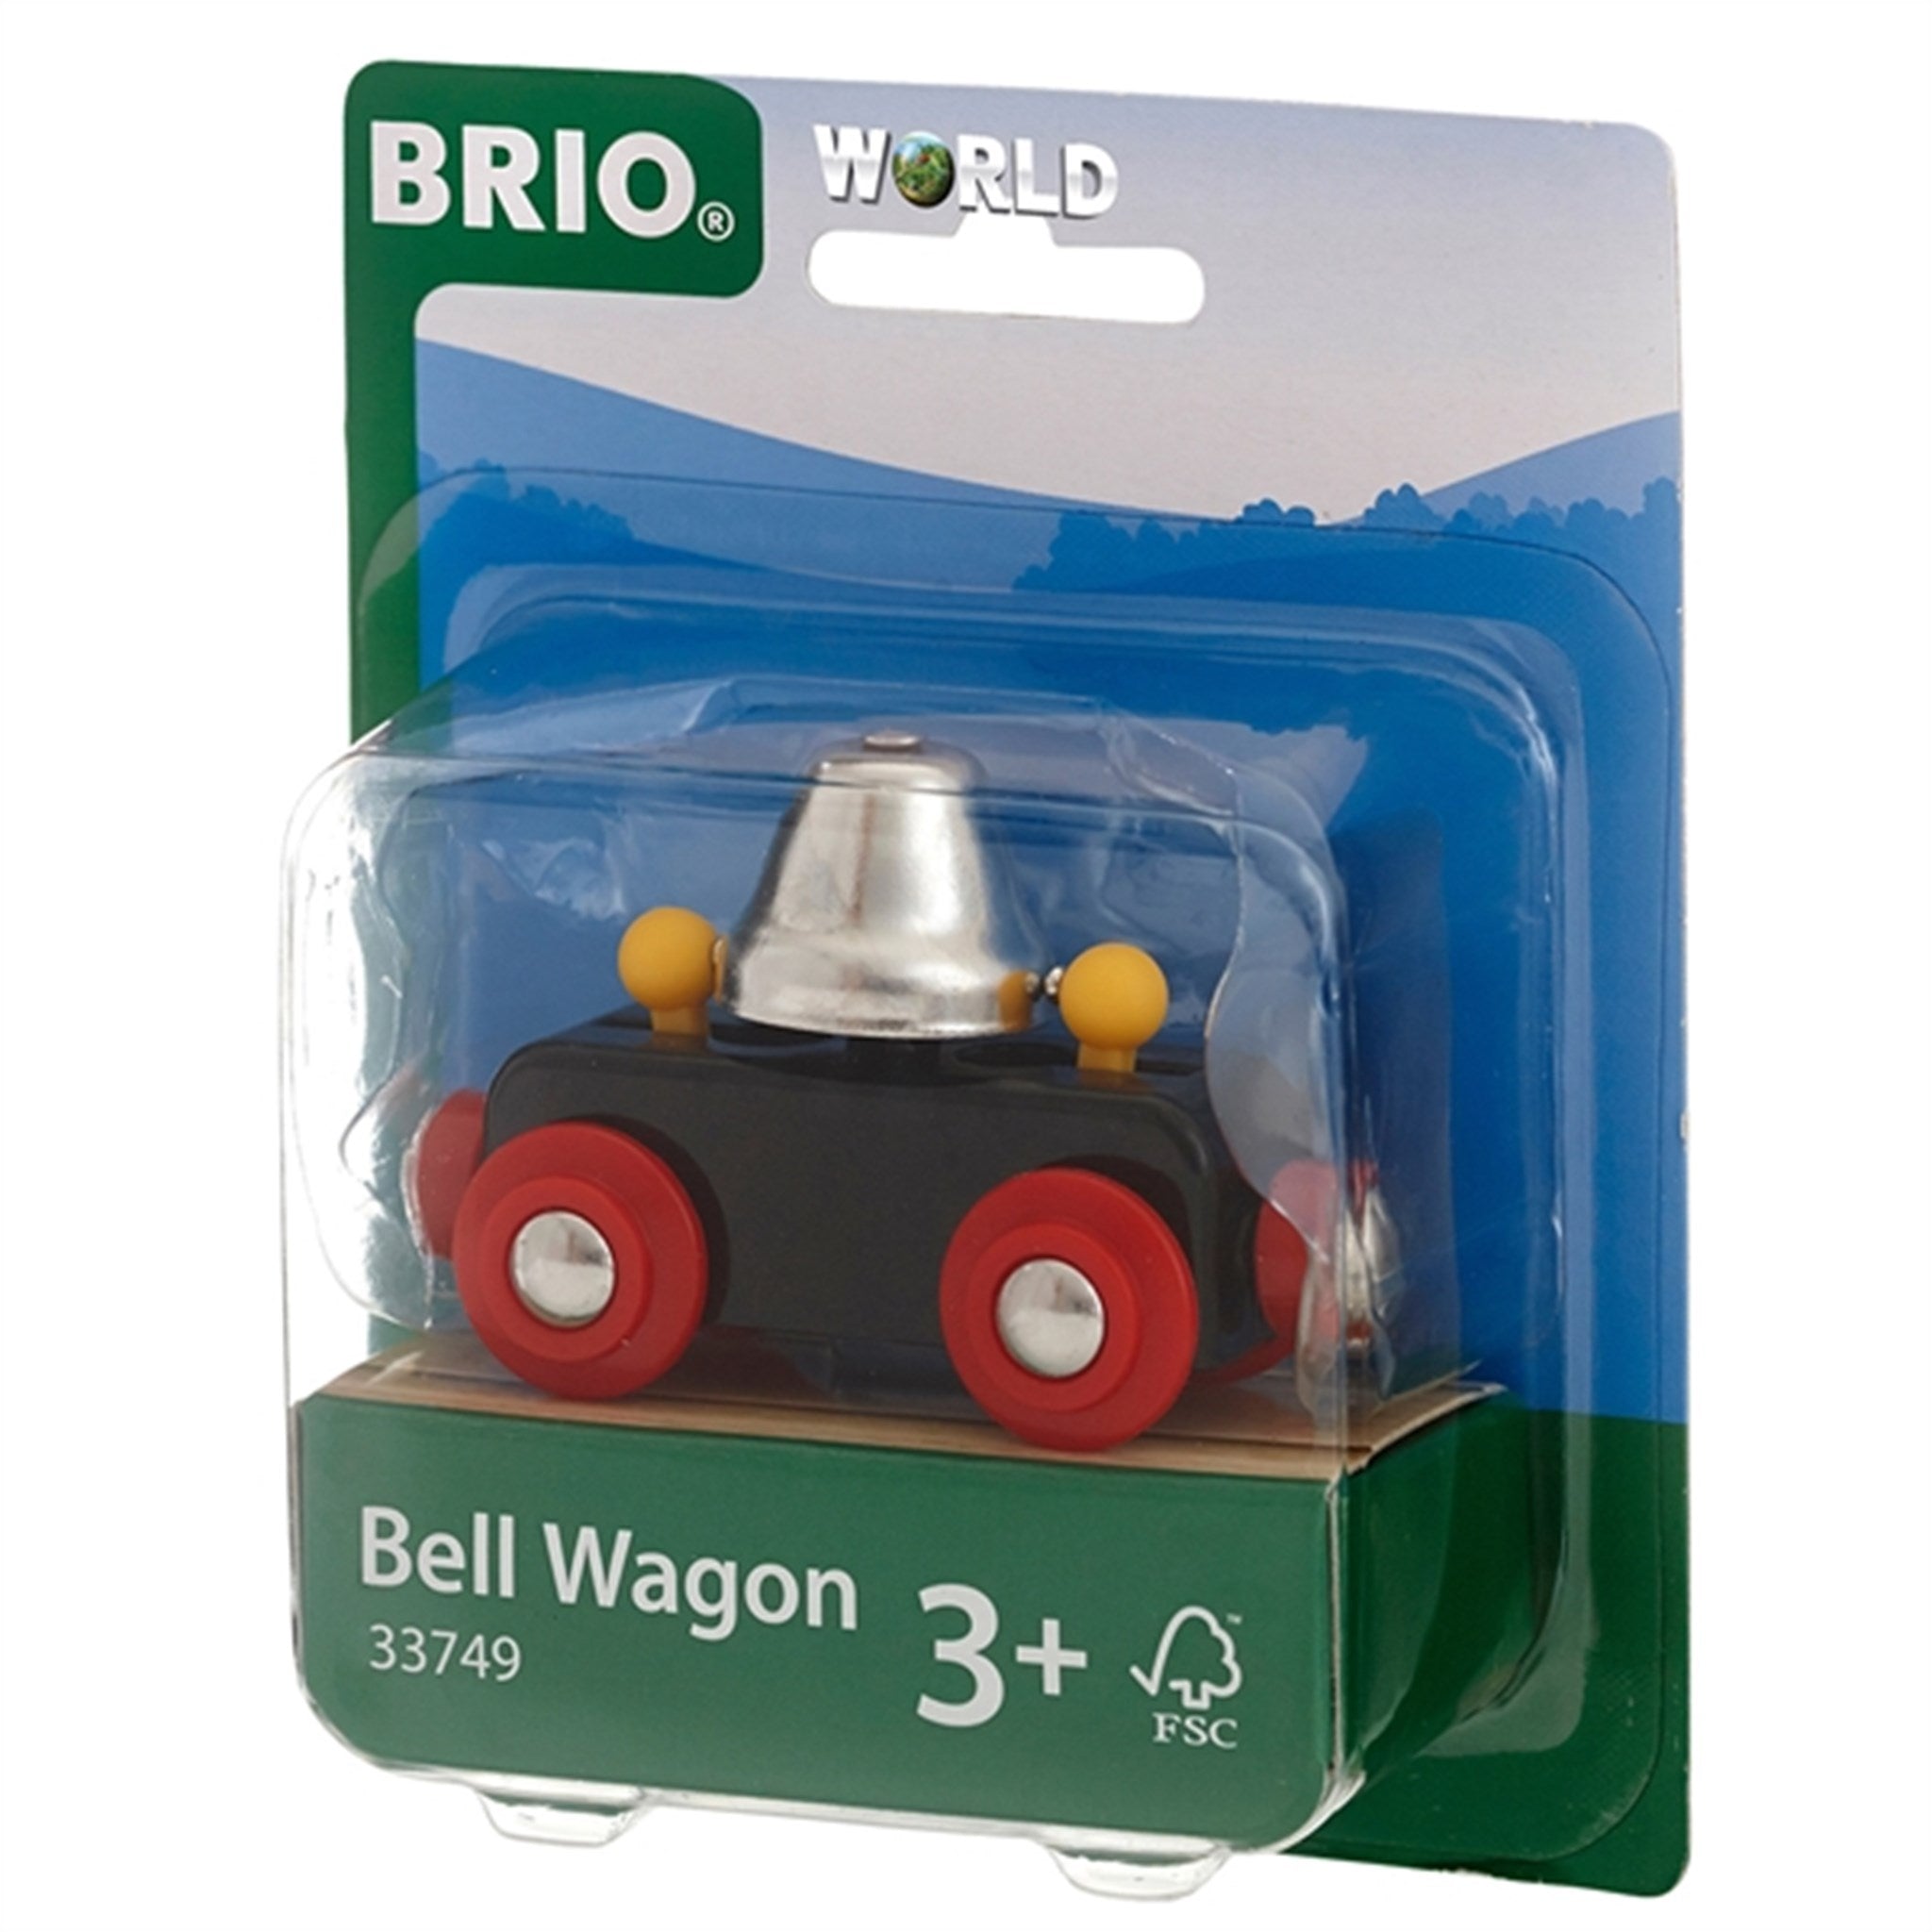 BRIO® Bell Wagon 2